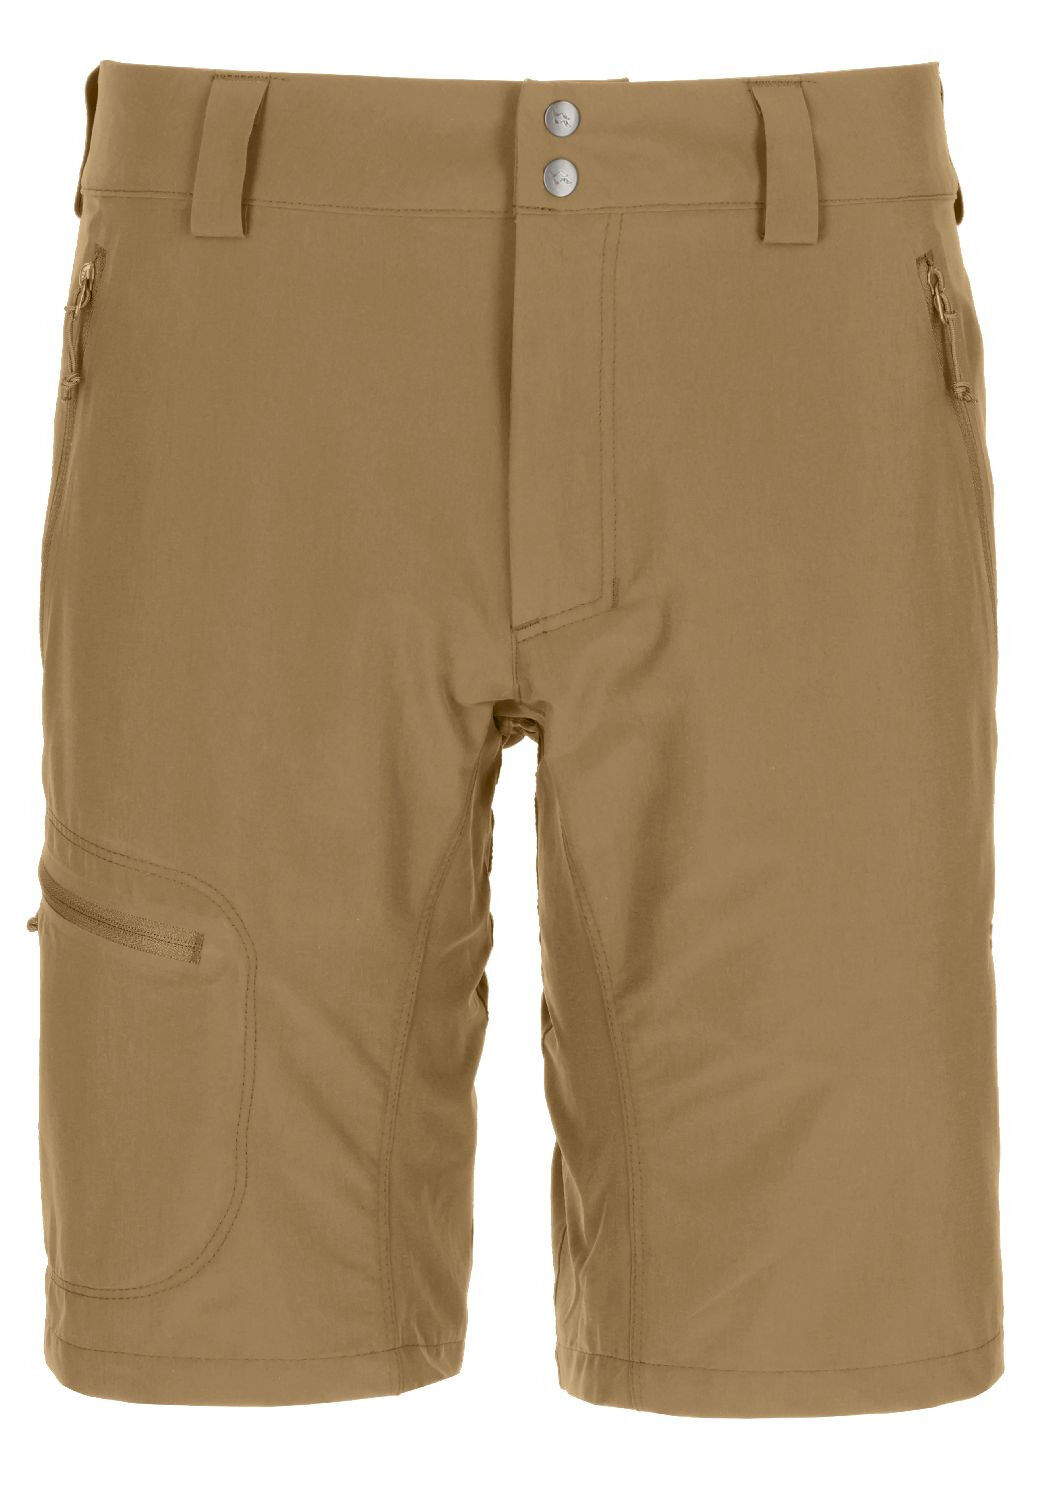 Rab Incline Light - Shorts - Men's